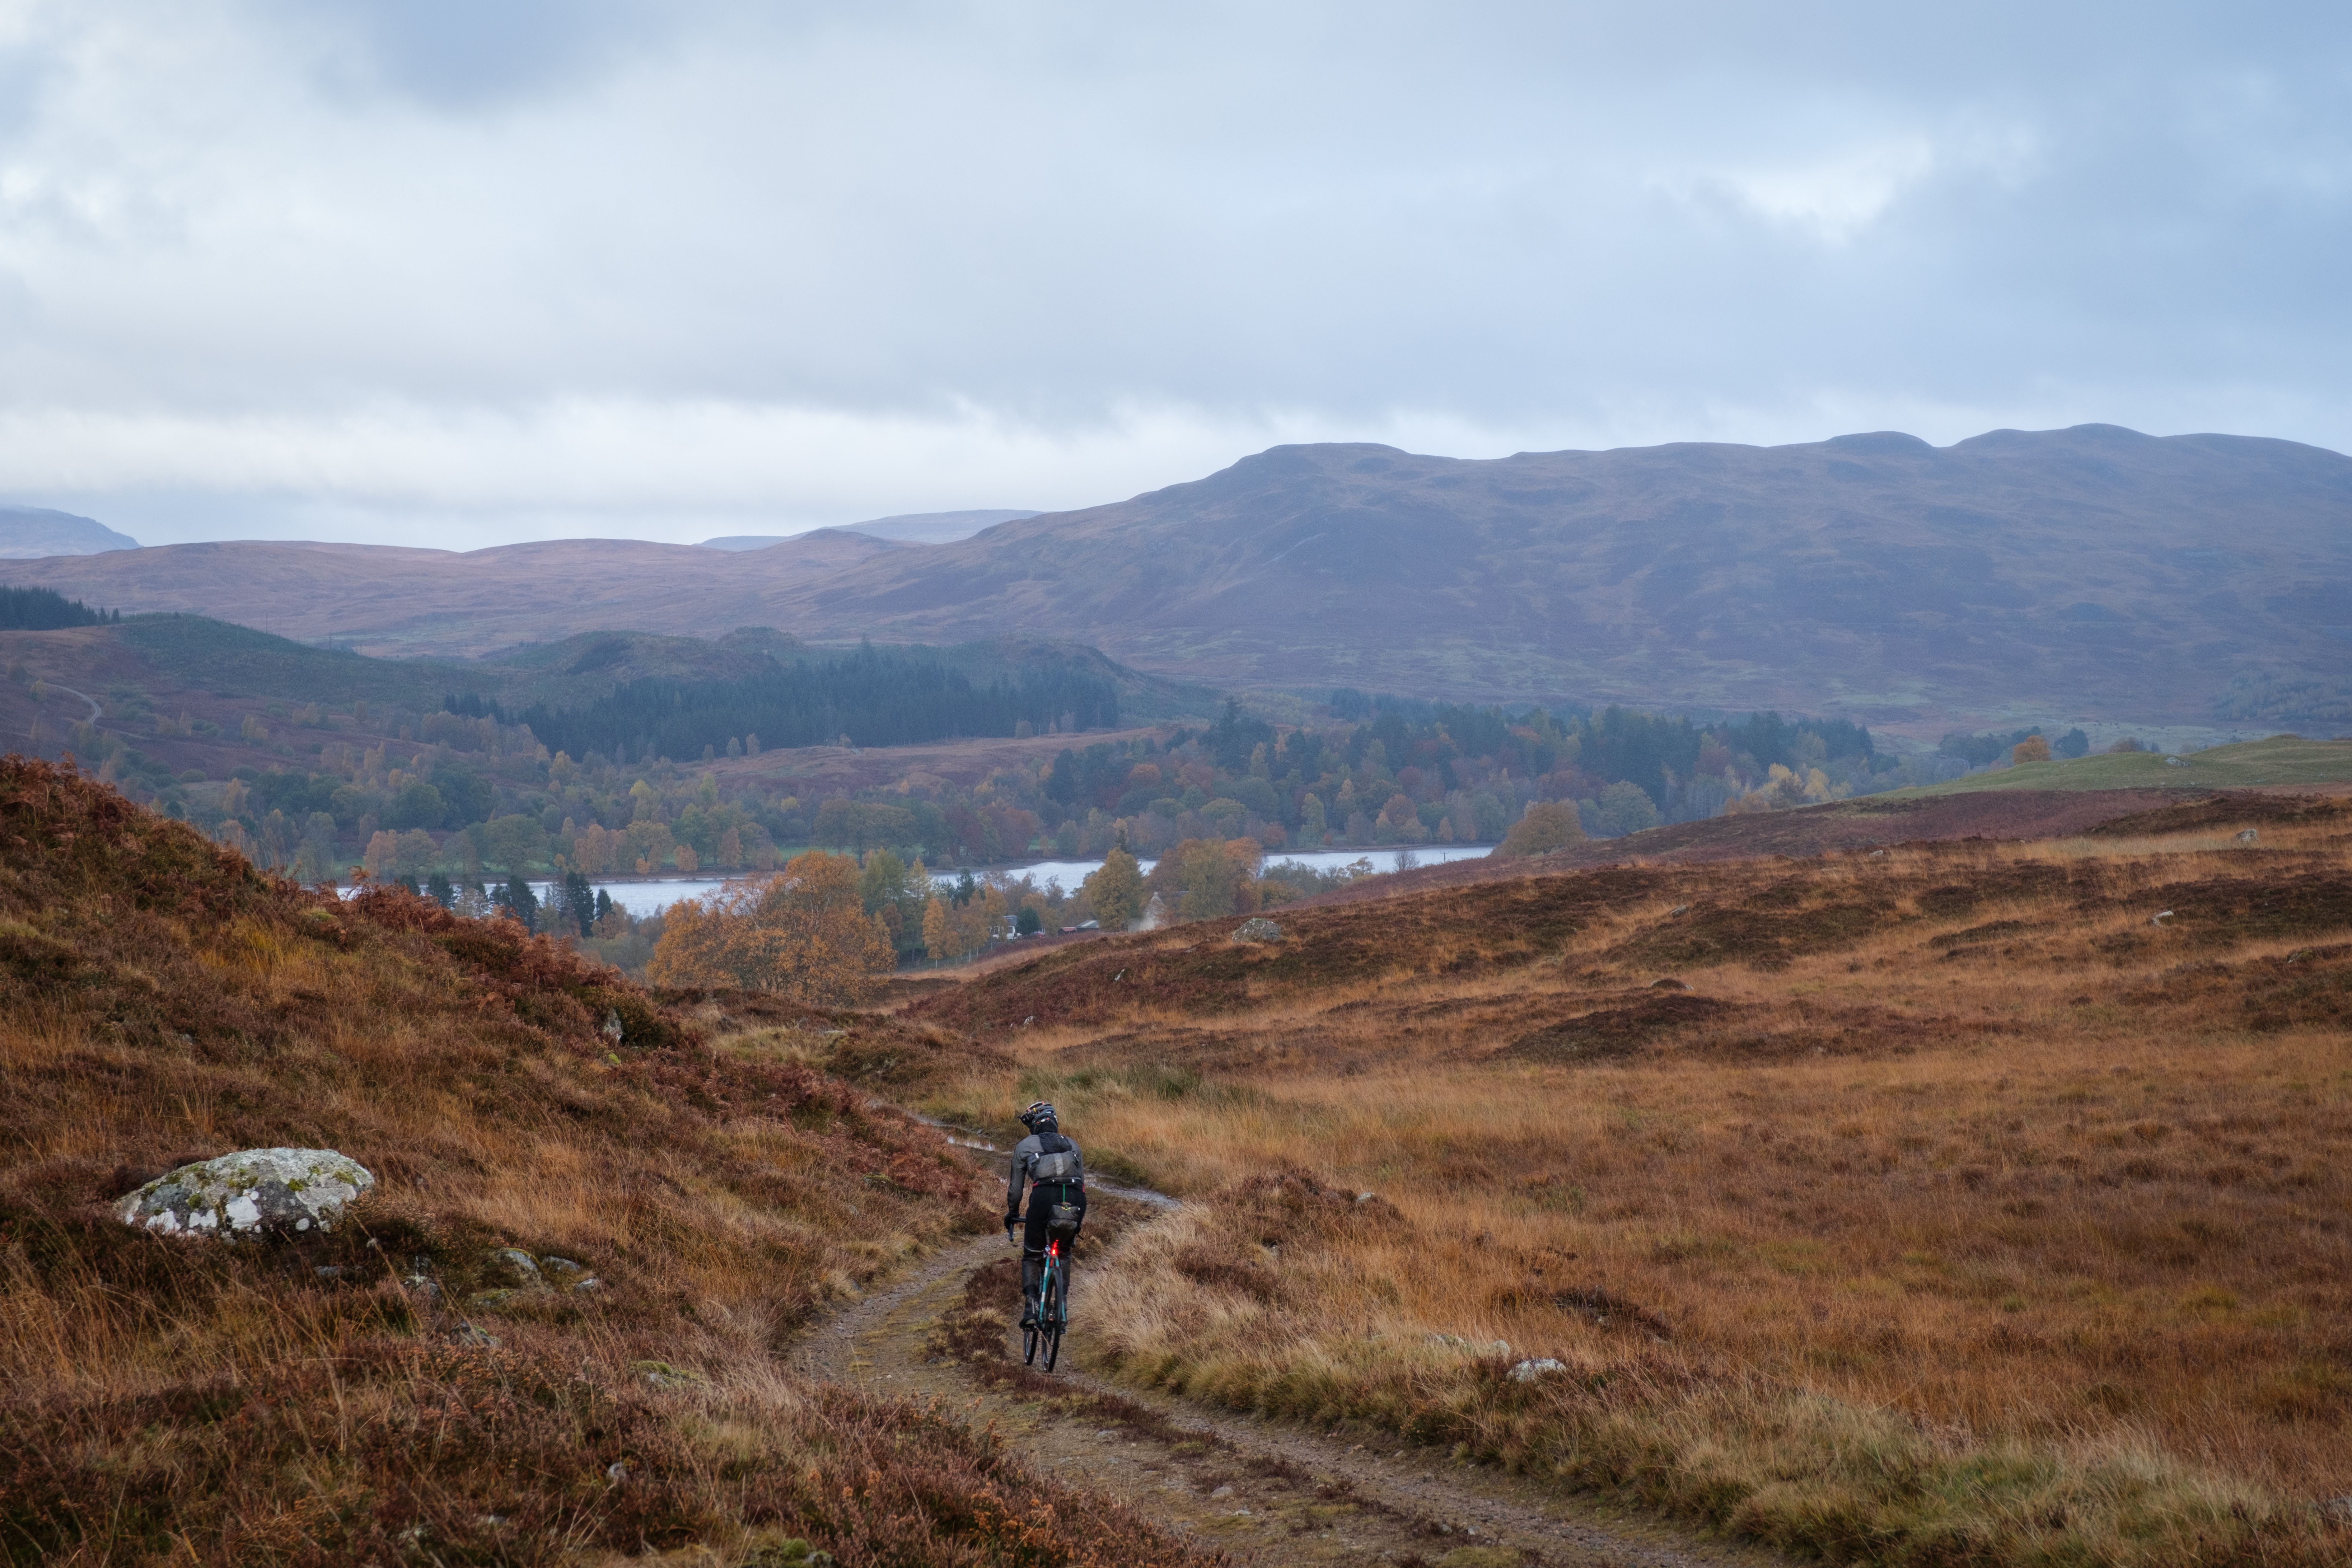 Pawel "Piko" Pulawski riding through the Scottish Cairngorms during Further Scotland.